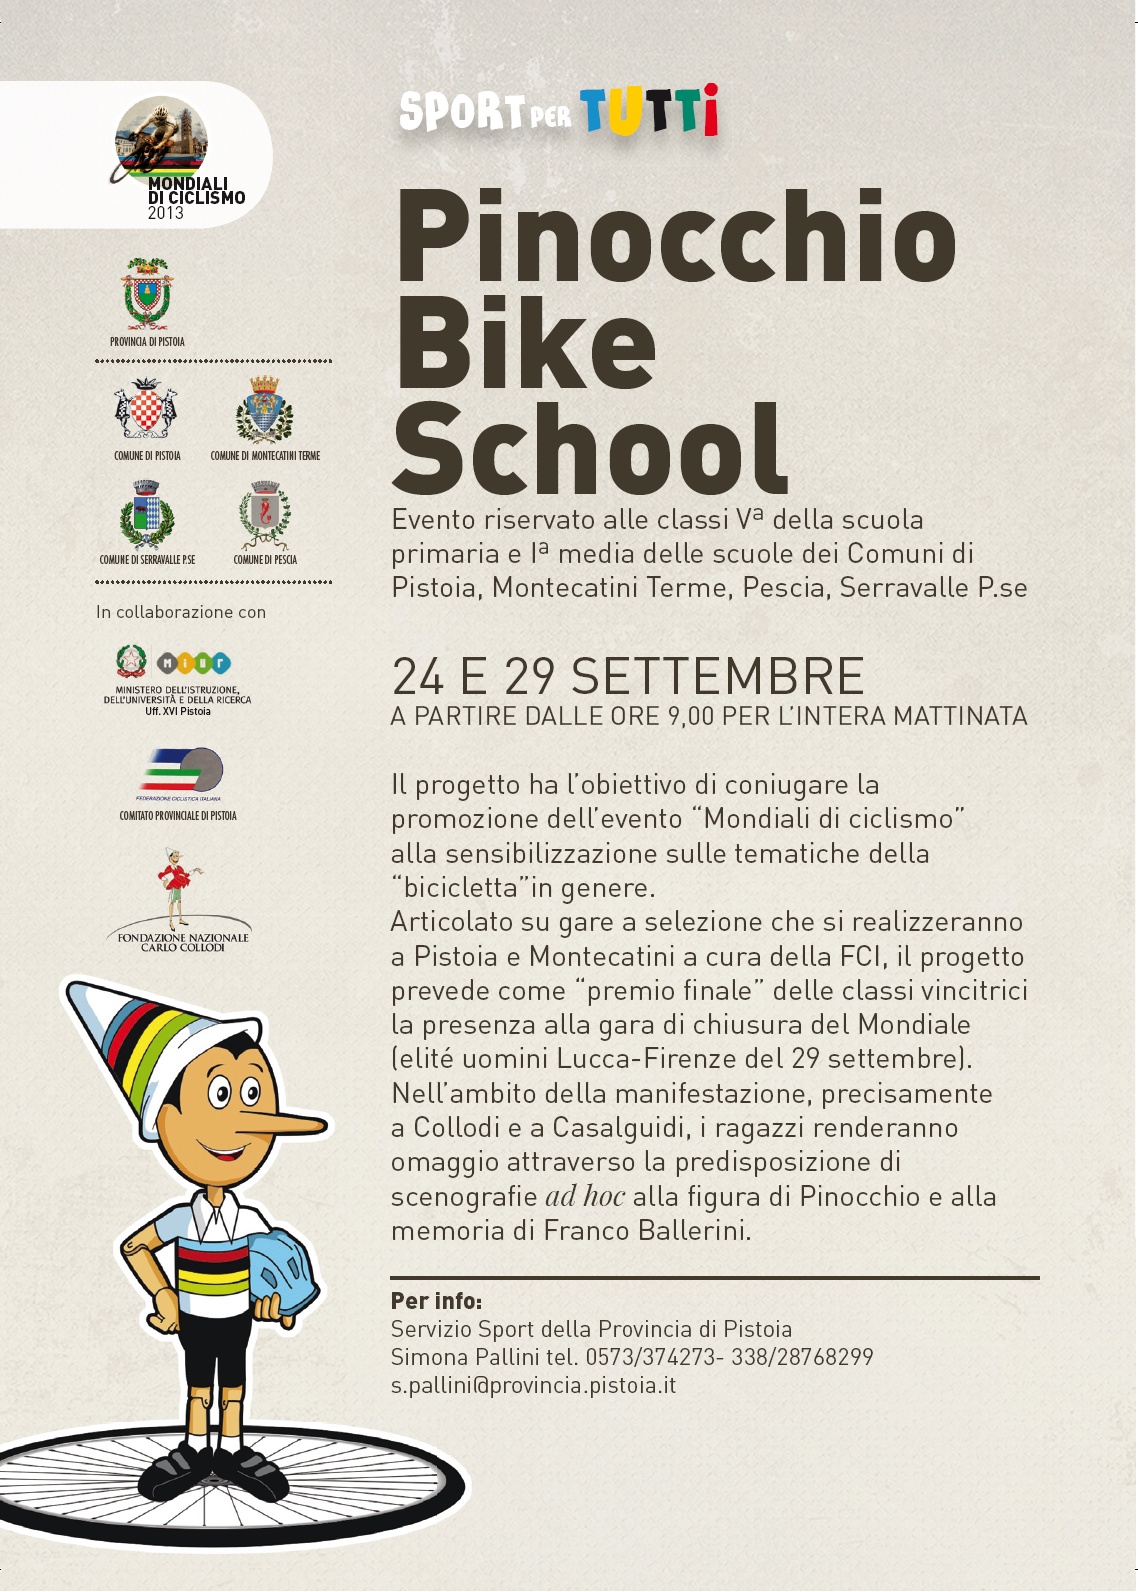 Pinocchio bike school